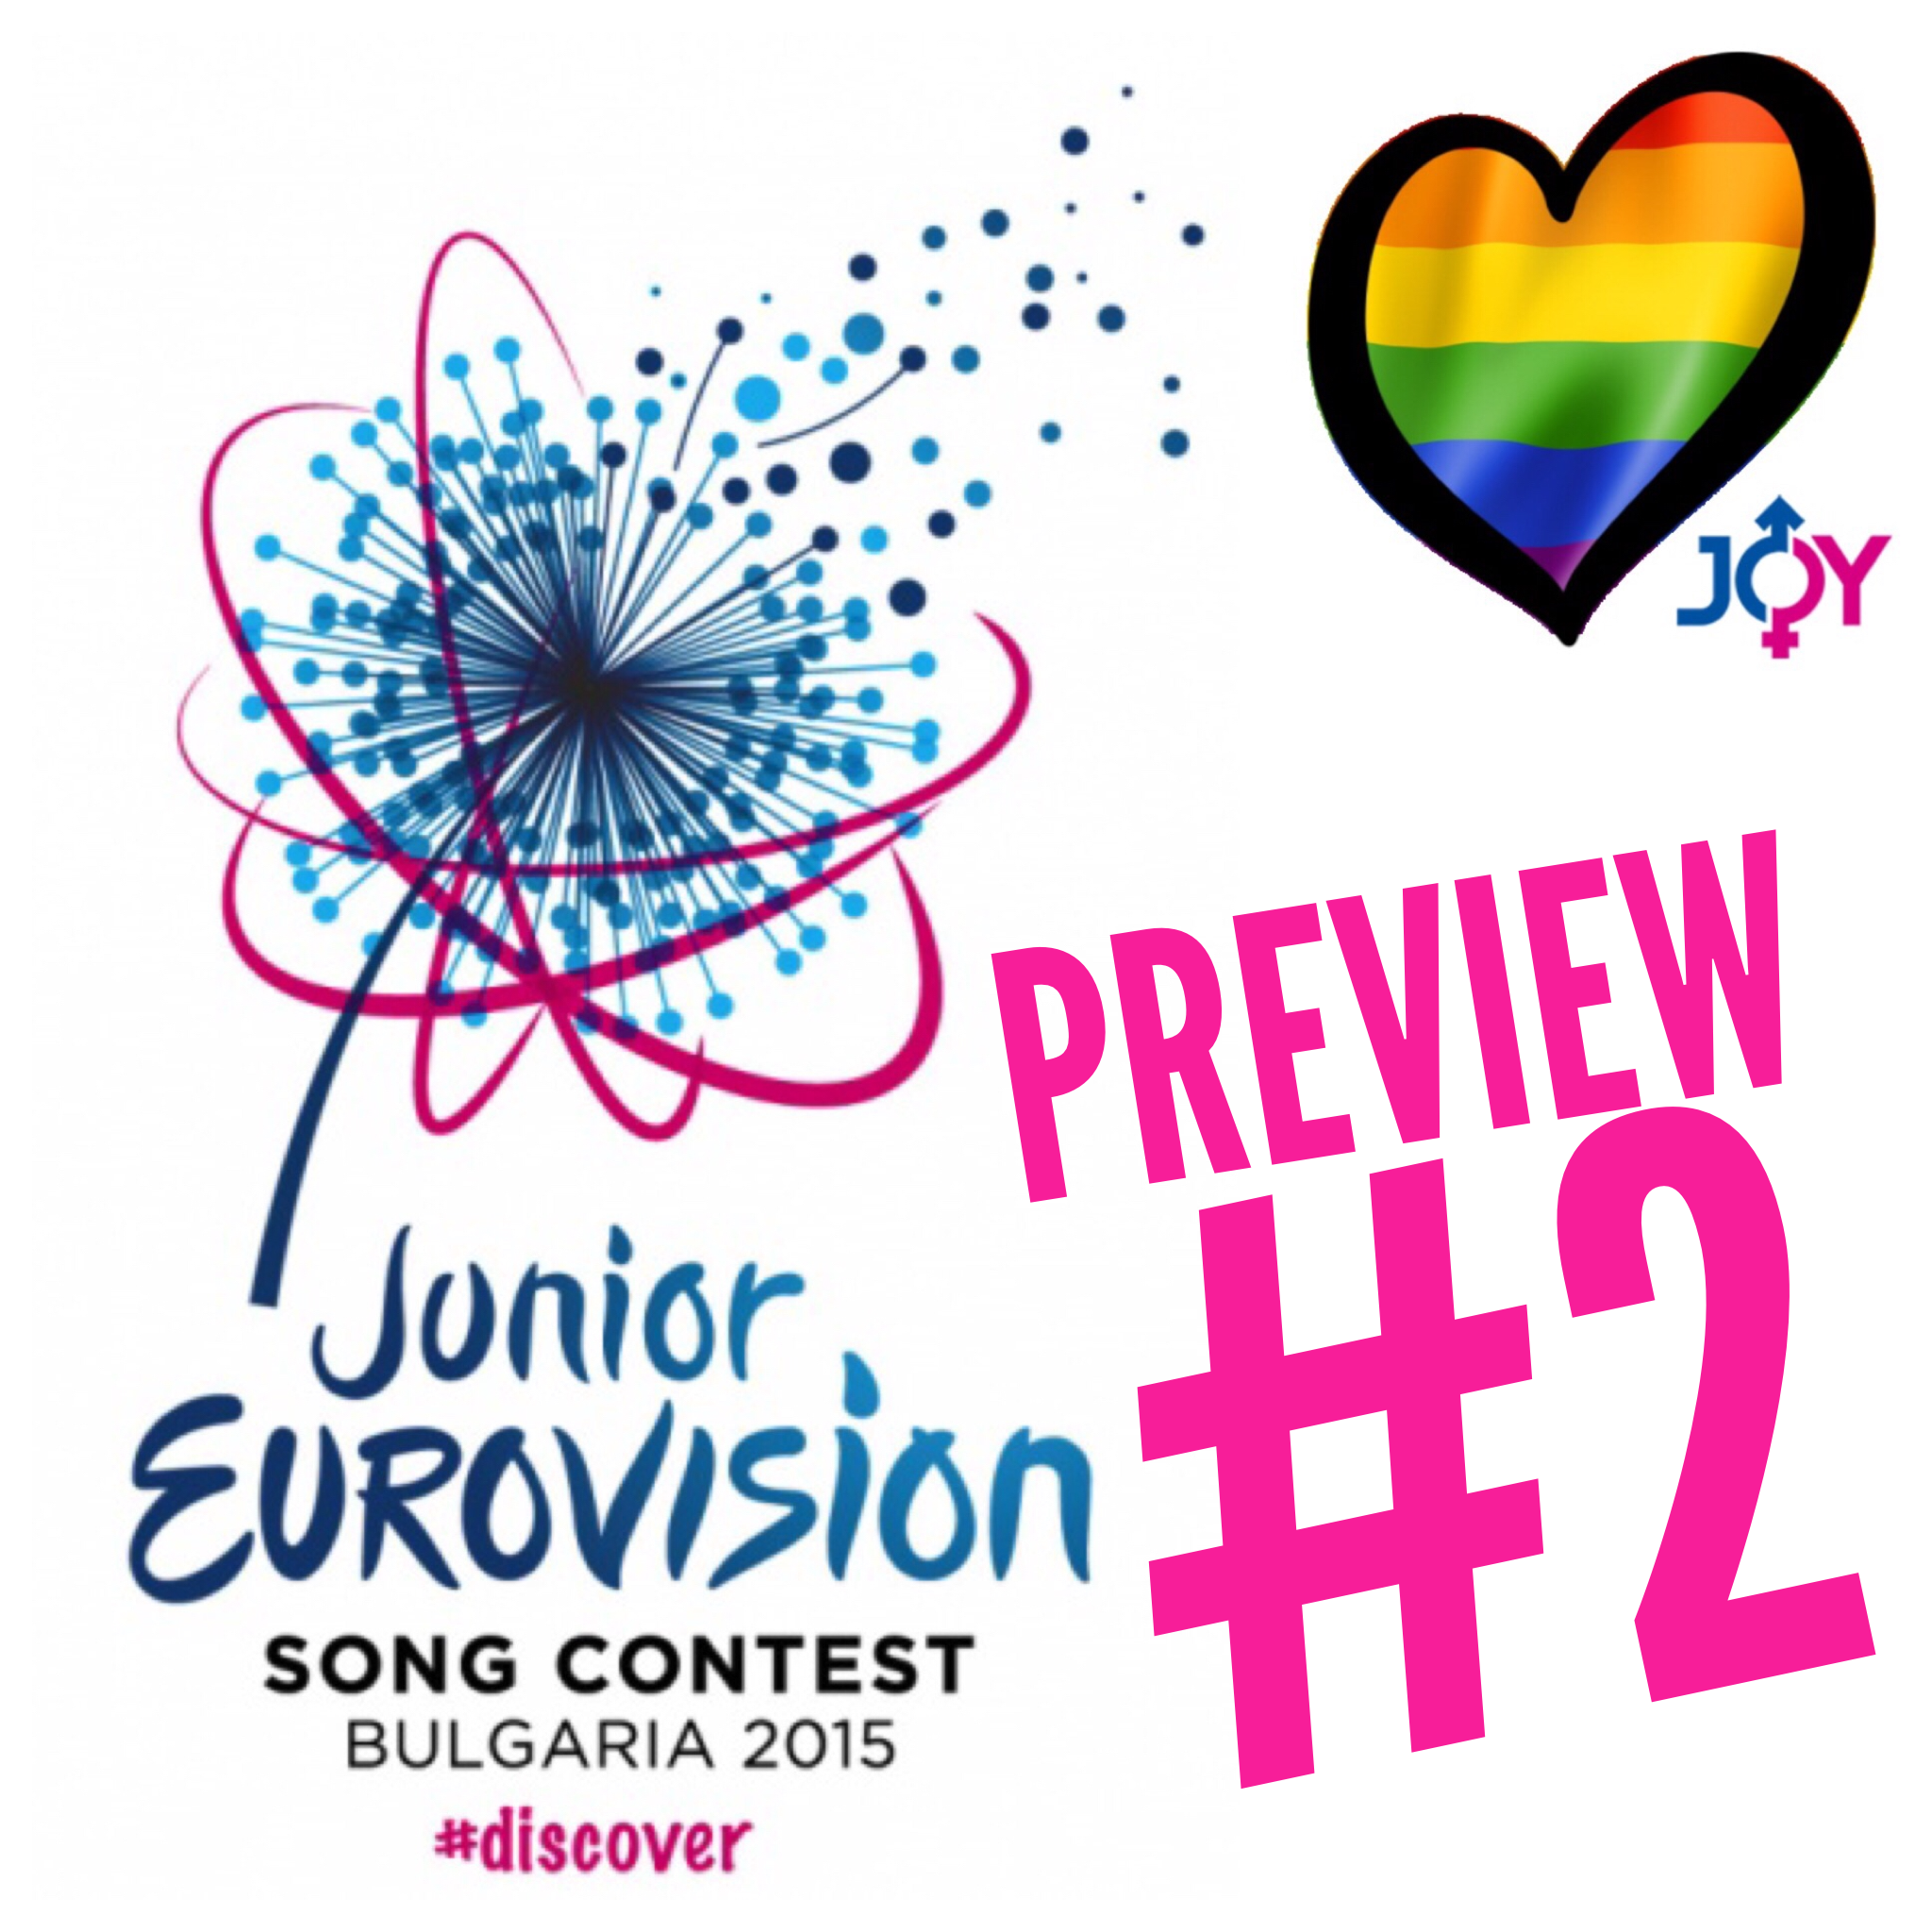 Junior Eurovision 2015: Preview #2